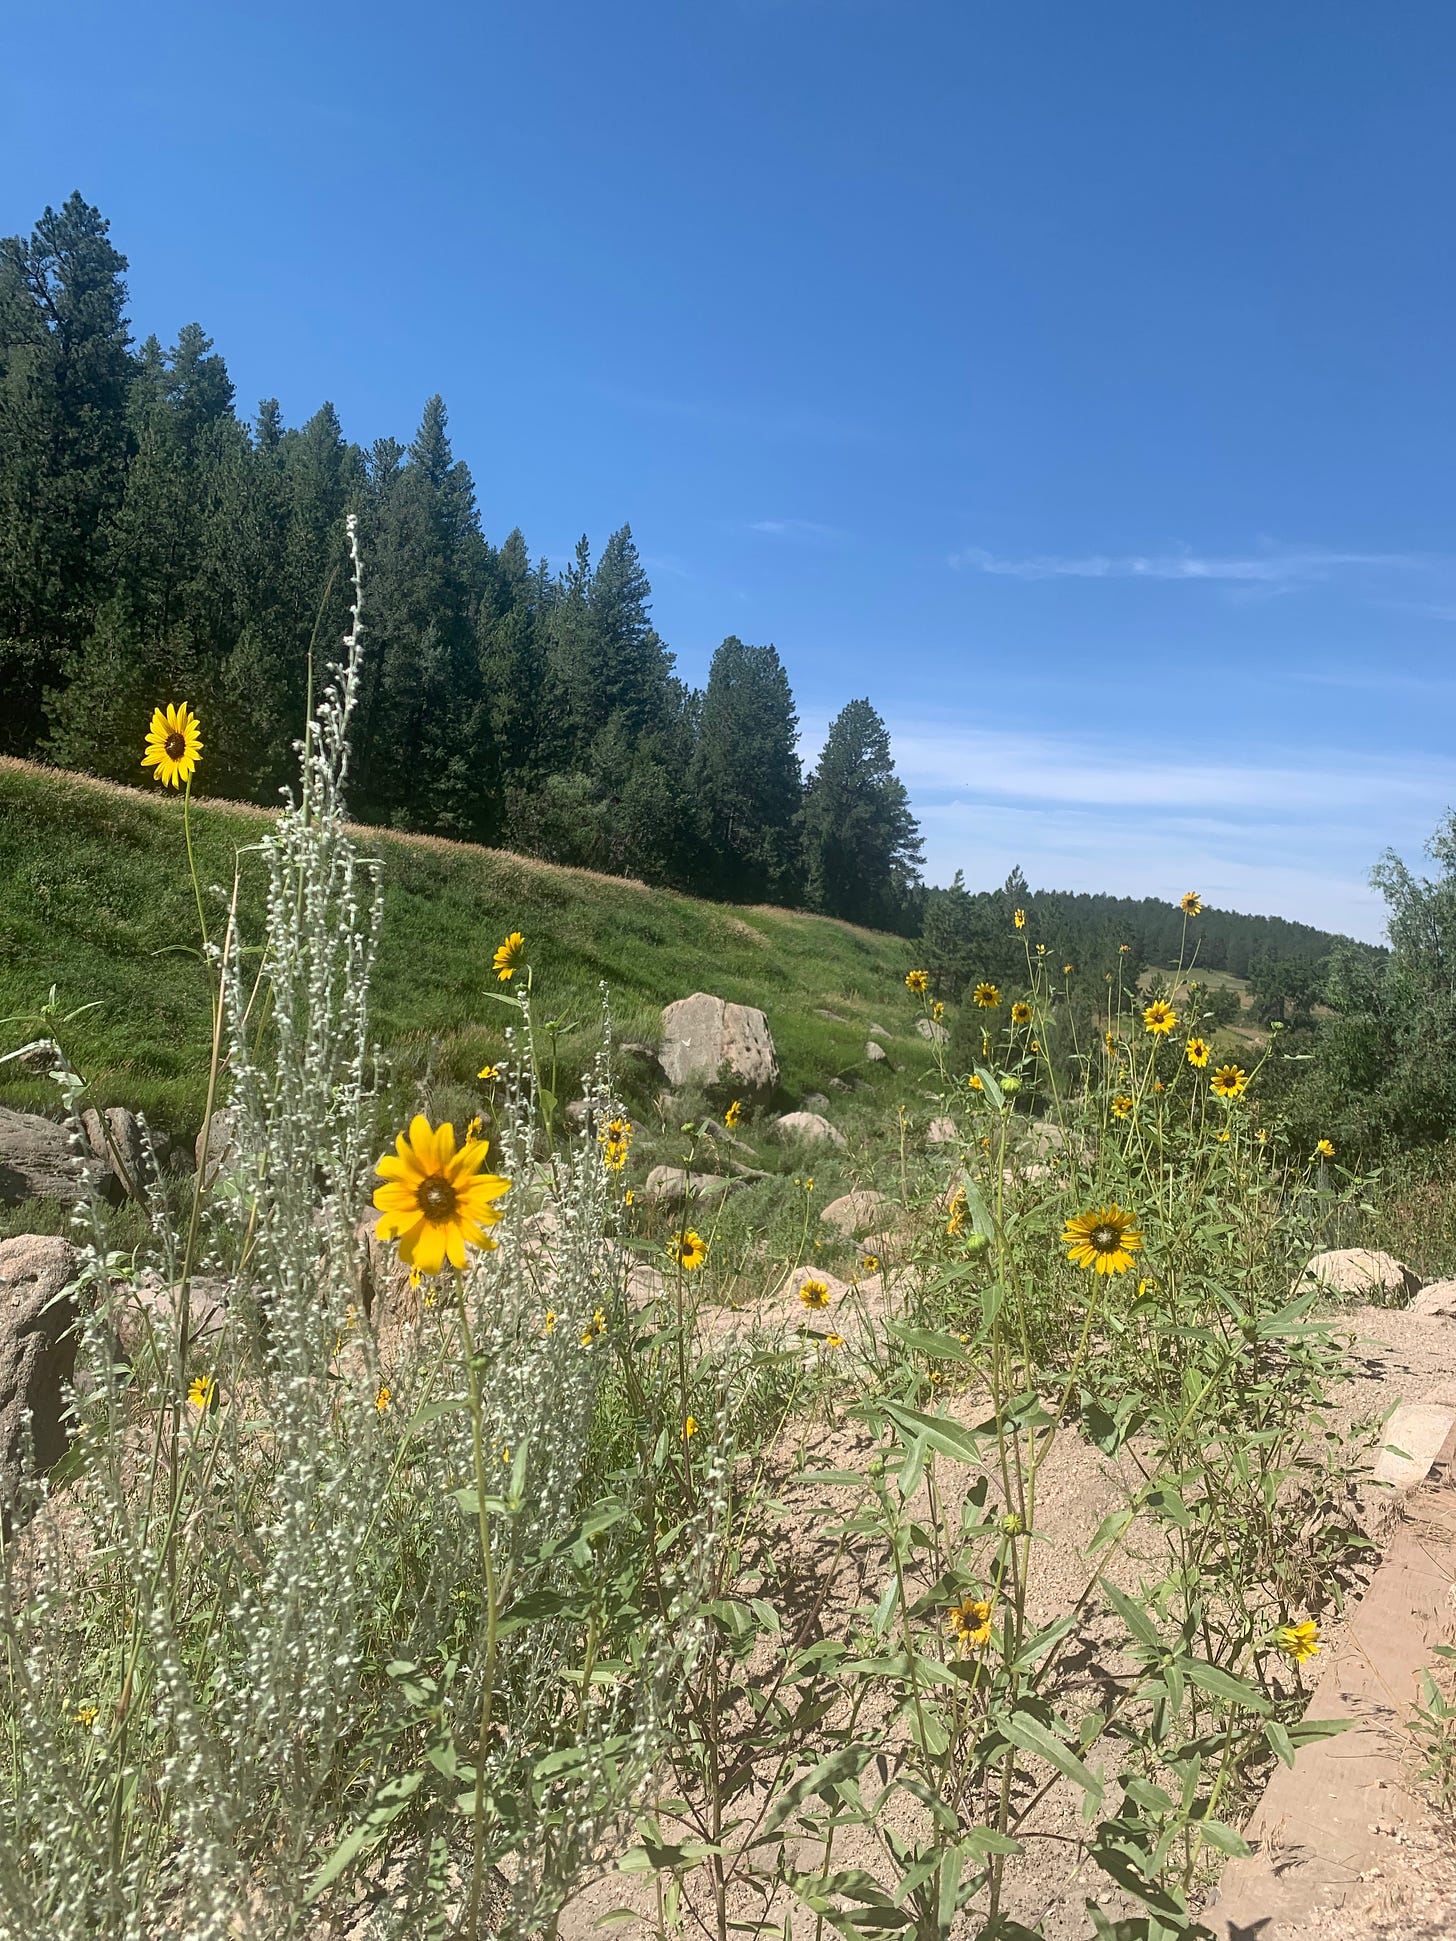 Wildflowers, mountains, backdrop of evergreens, grass, rocks, blue sky. A recent hike 